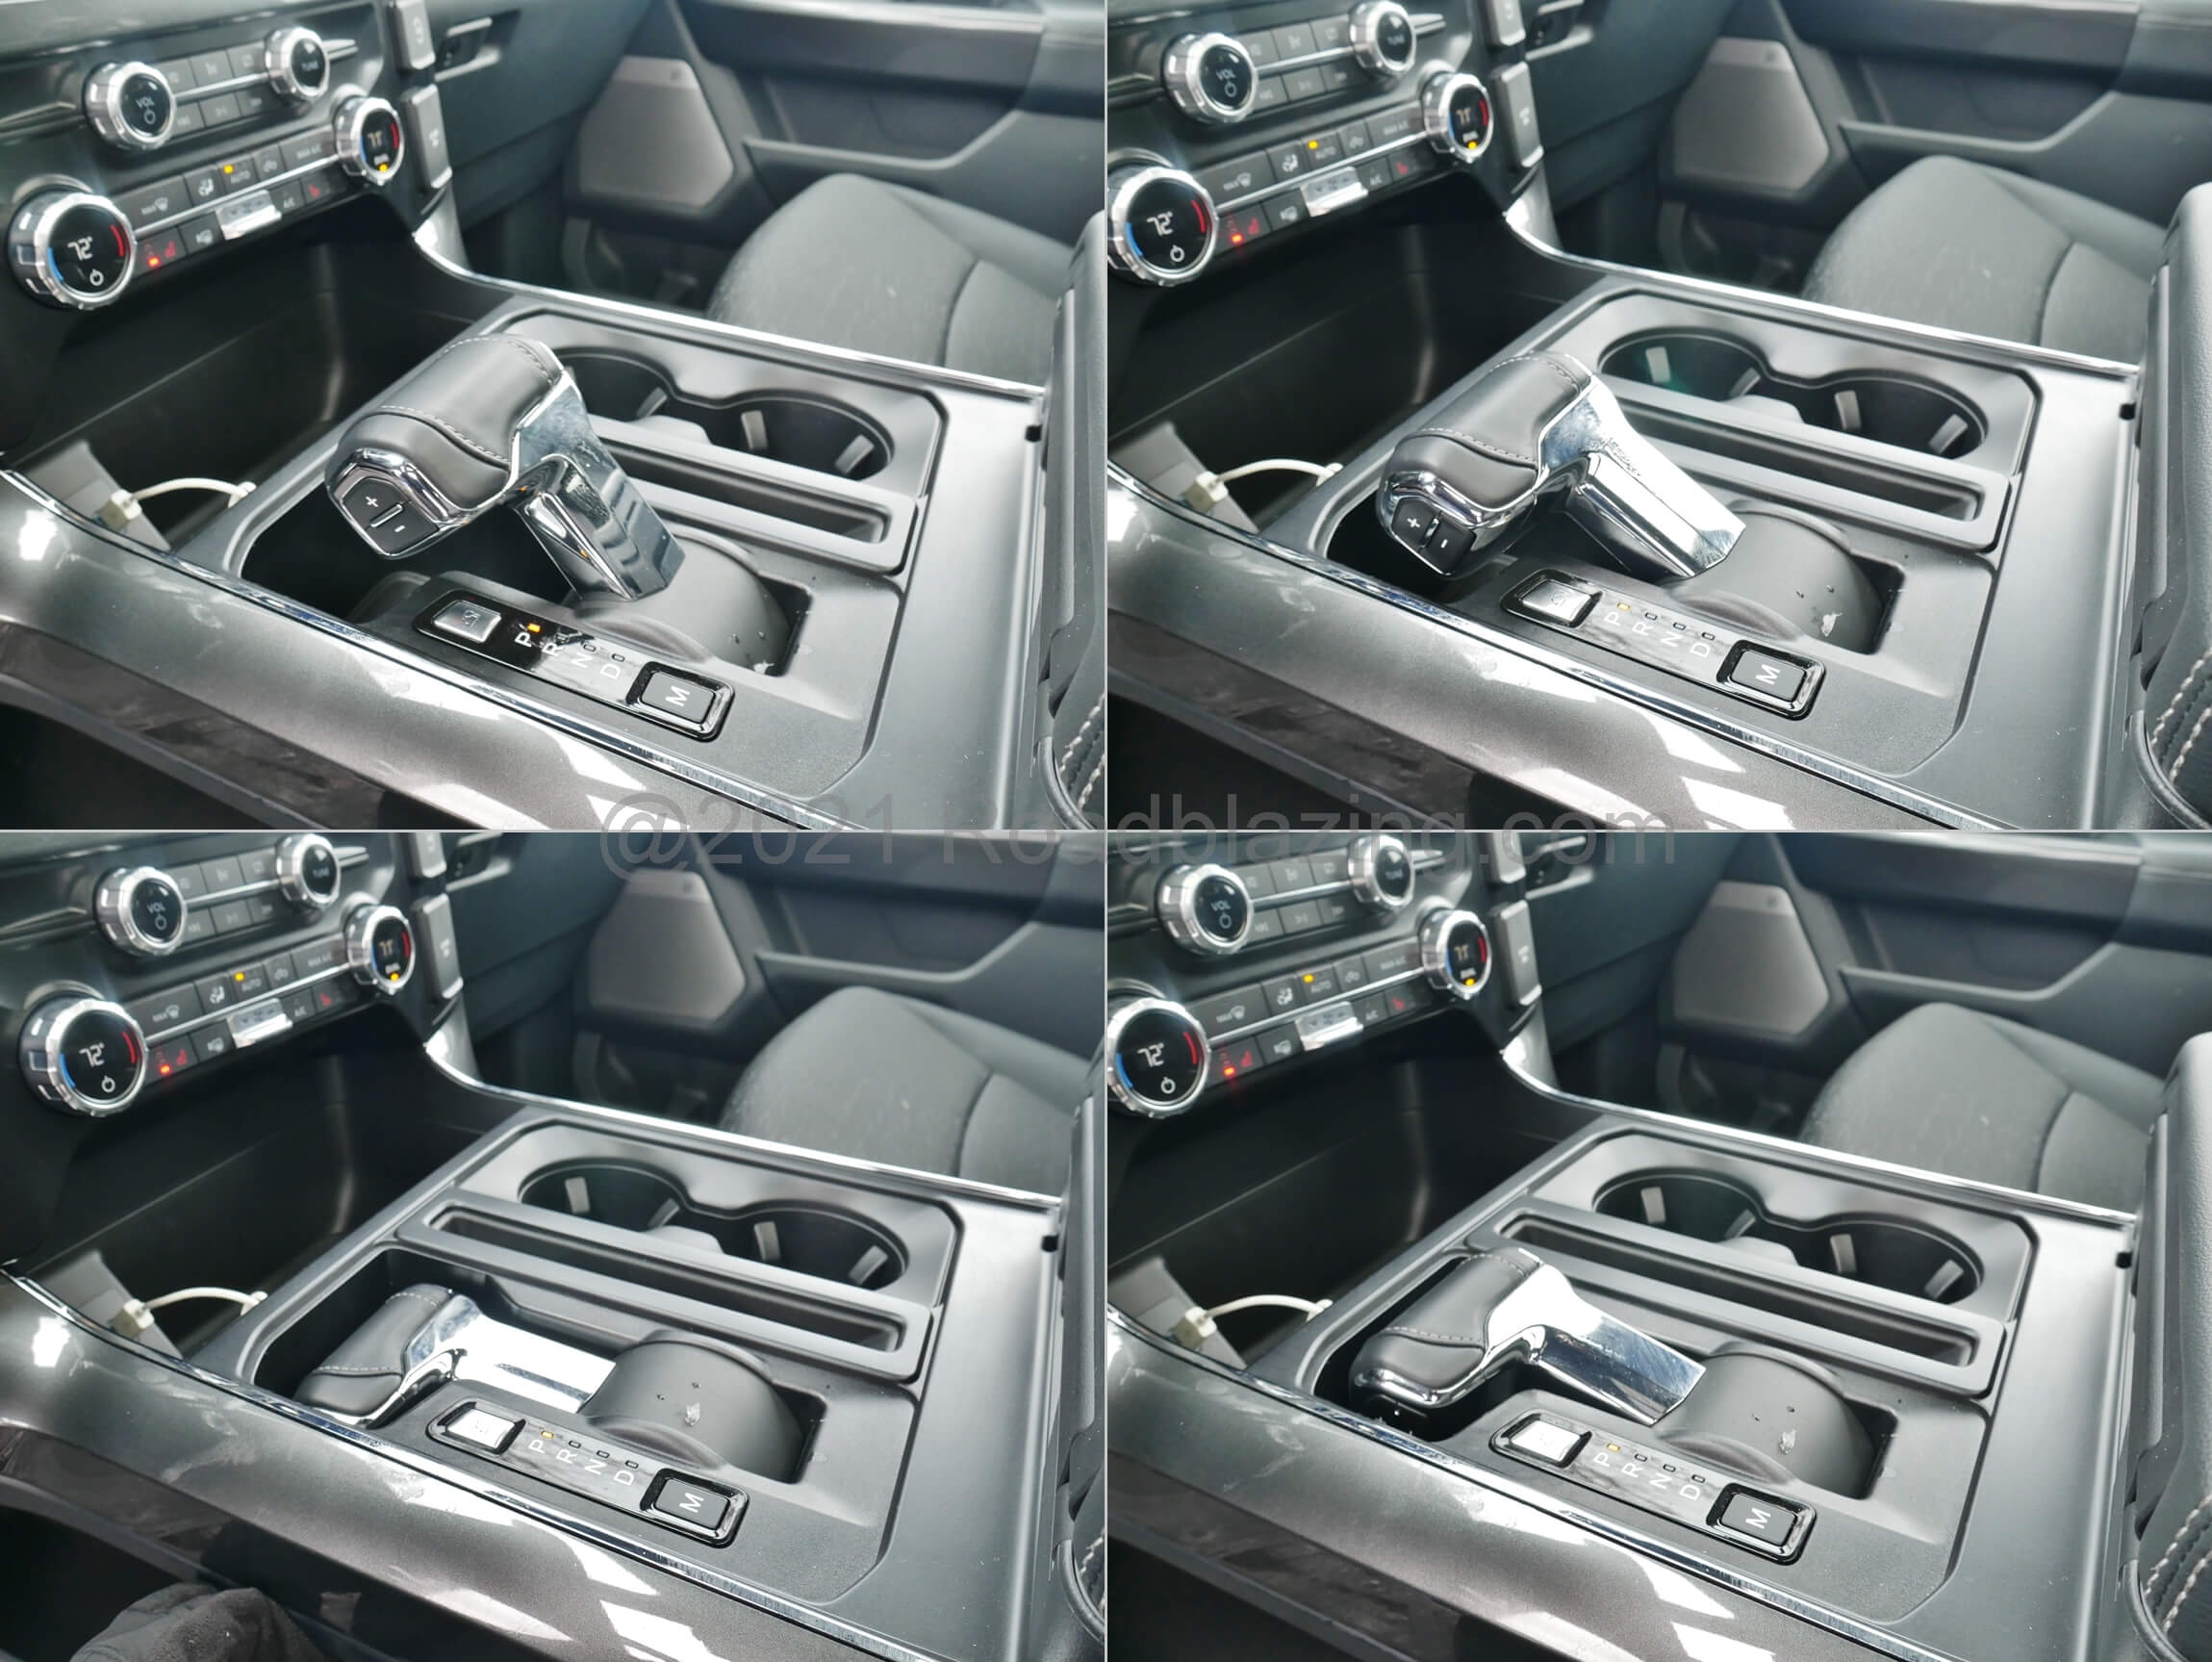 2021 Ford F-150 Supercrew XLT 4x4 PowerBoost hybrid: power folding console transmission shift lever